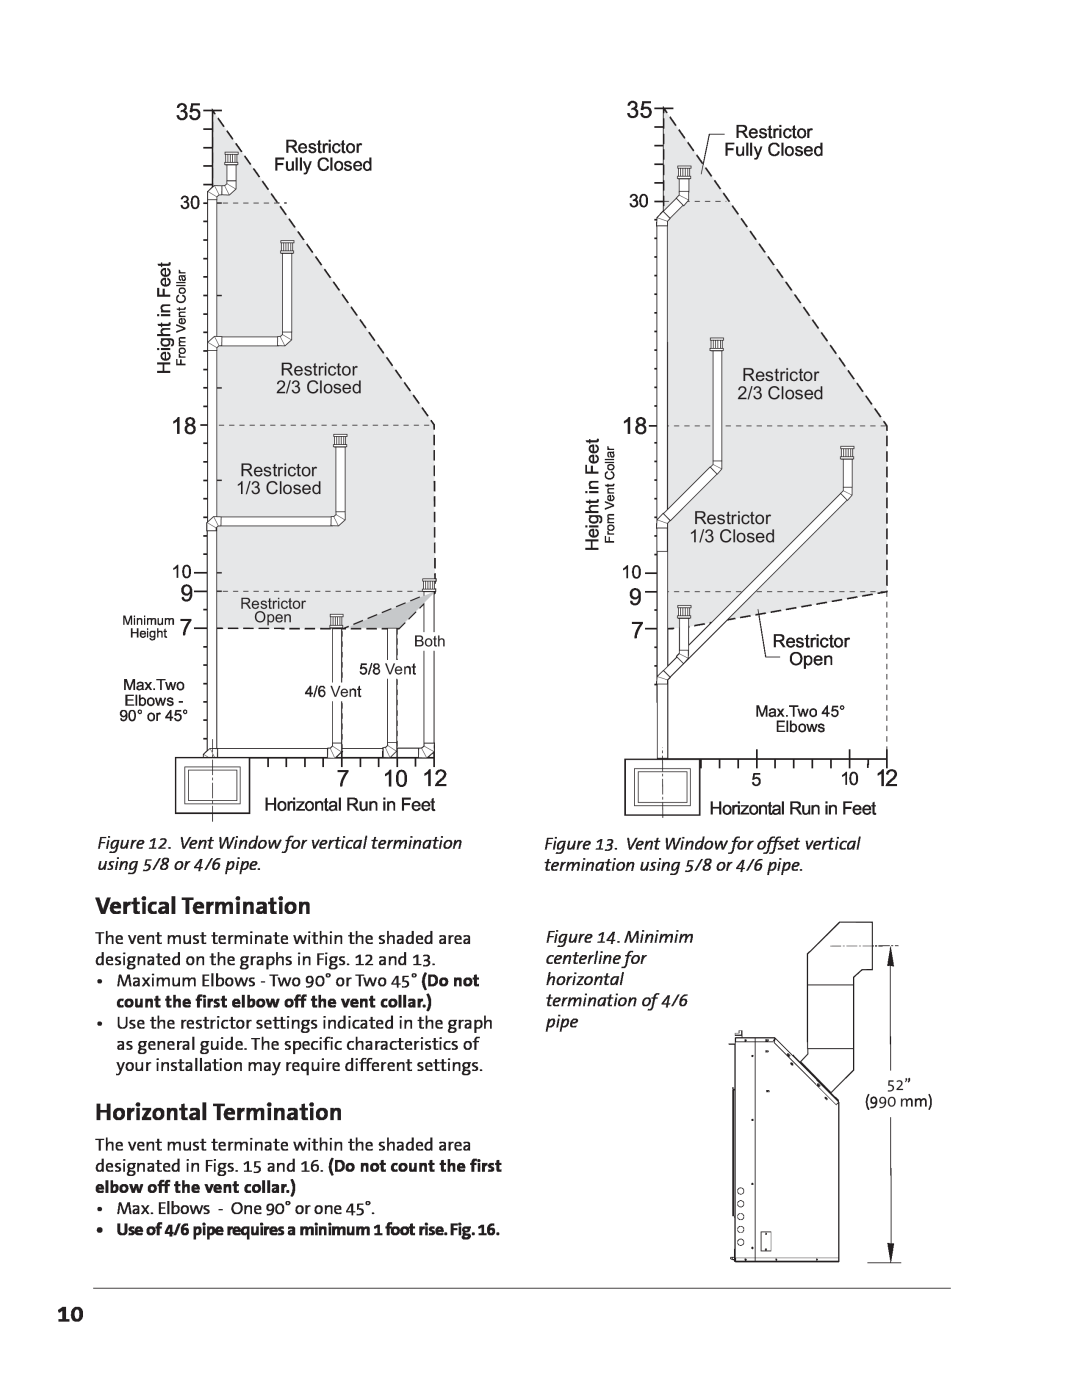 Jotul GZ 550 DV II manual Vertical Termination, Horizontal Termination 